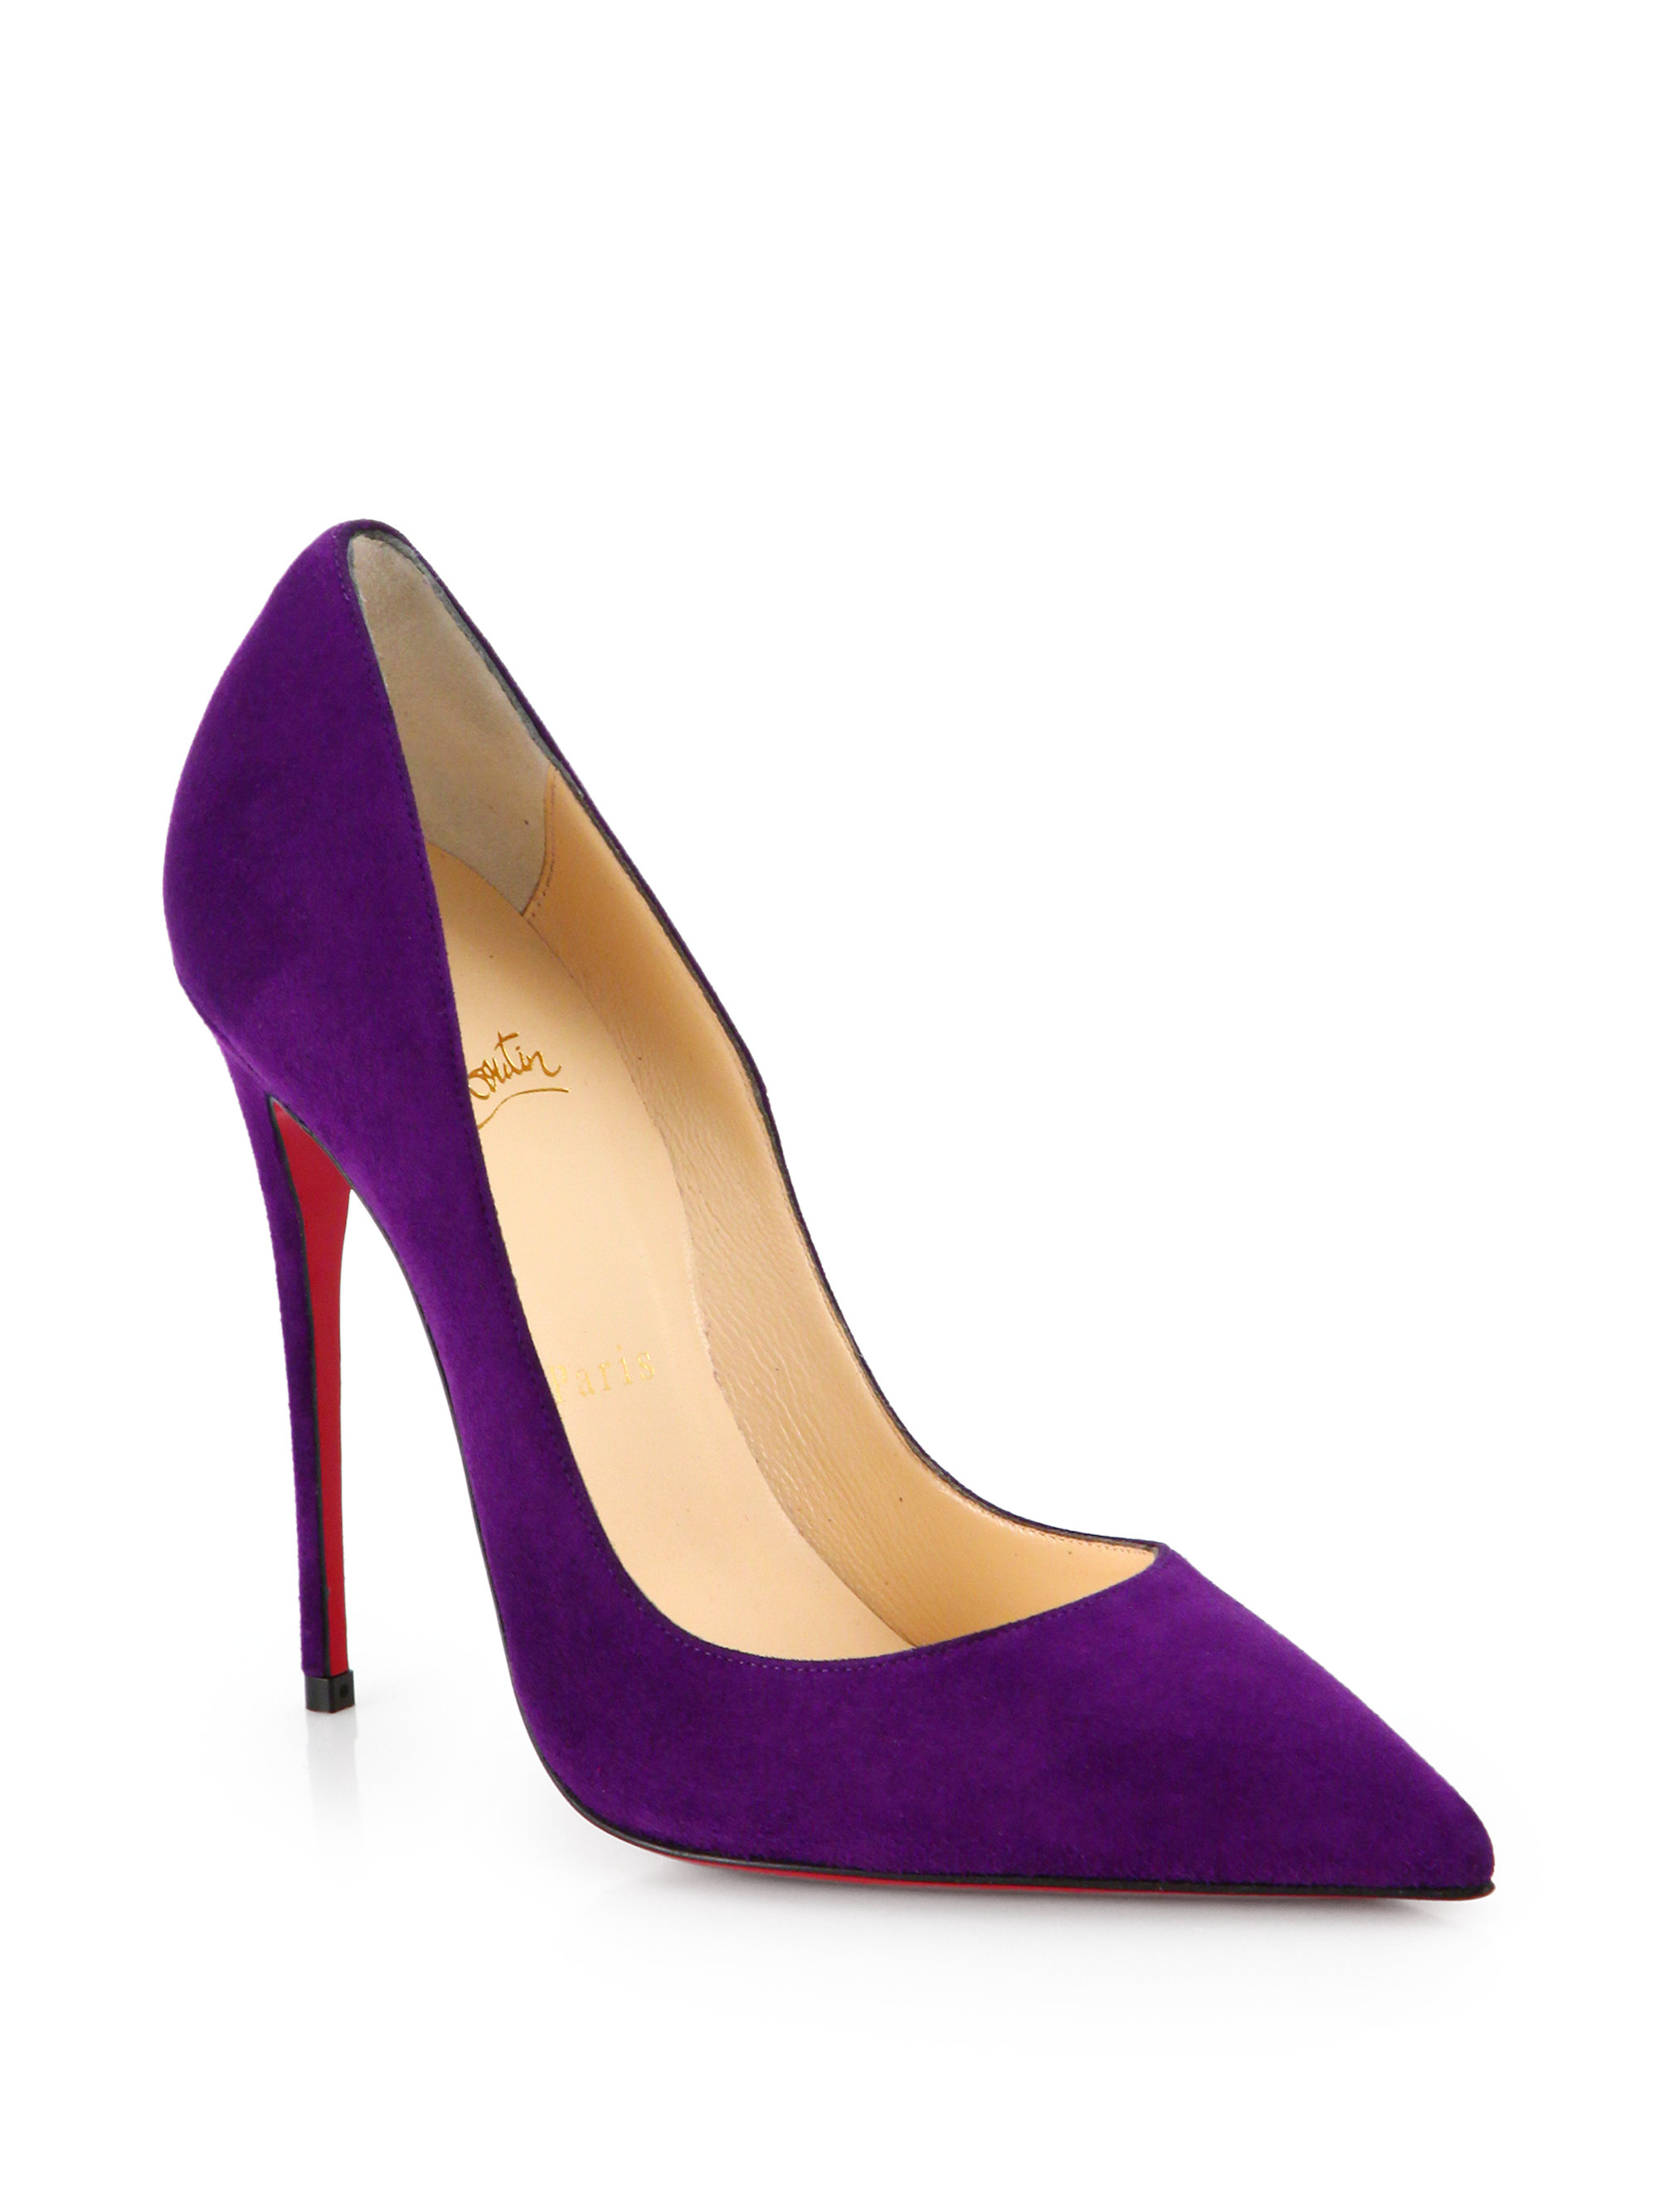 christian louboutin booties Plum suede stiletto heels | The Little ...  